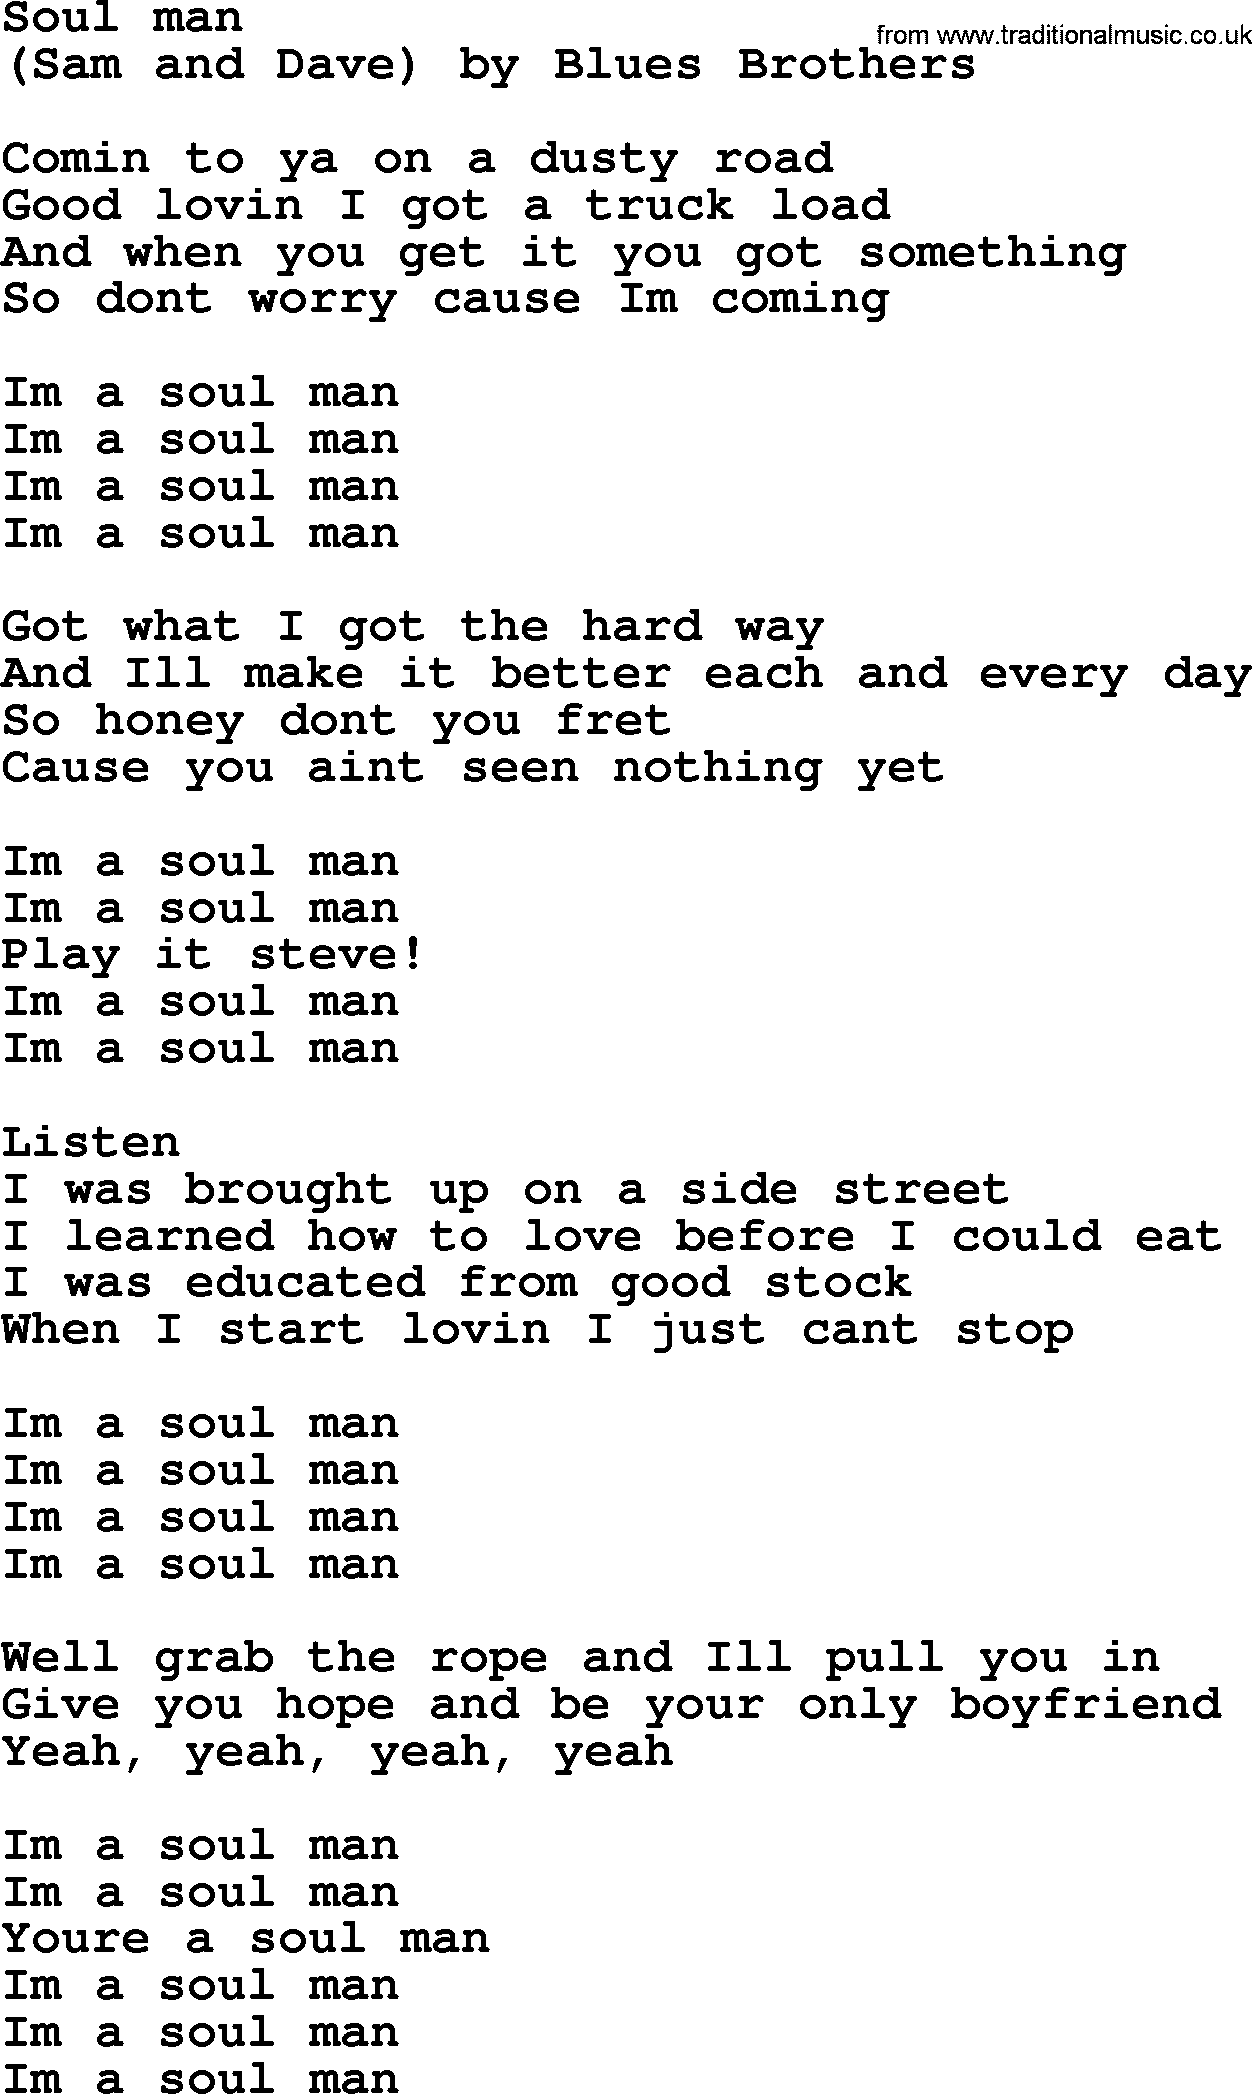 Bruce Springsteen song: Soul Man lyrics